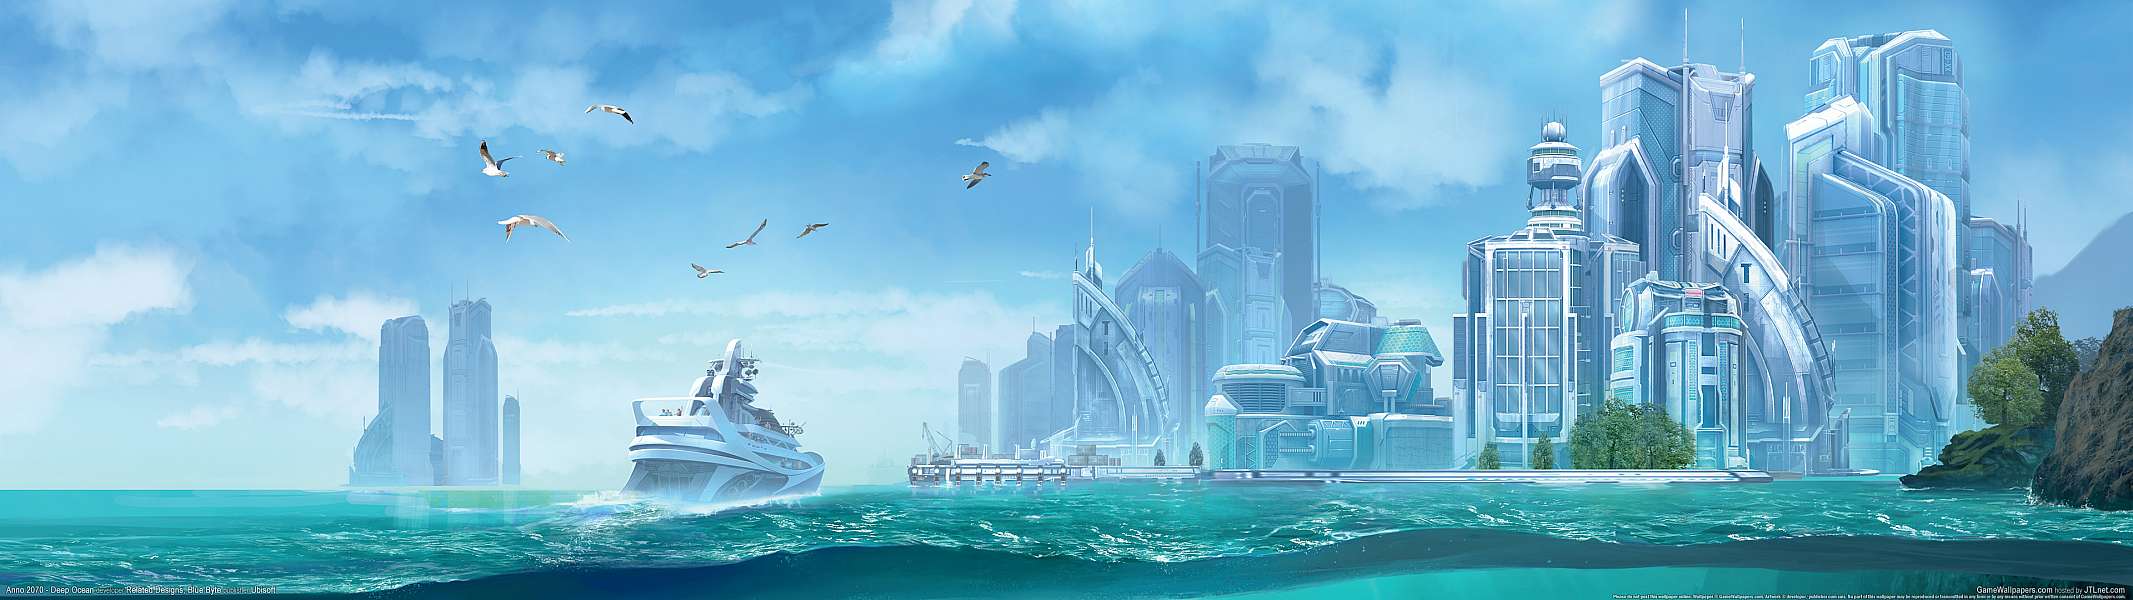 Anno 2070 - Deep Ocean dual screen wallpaper or background